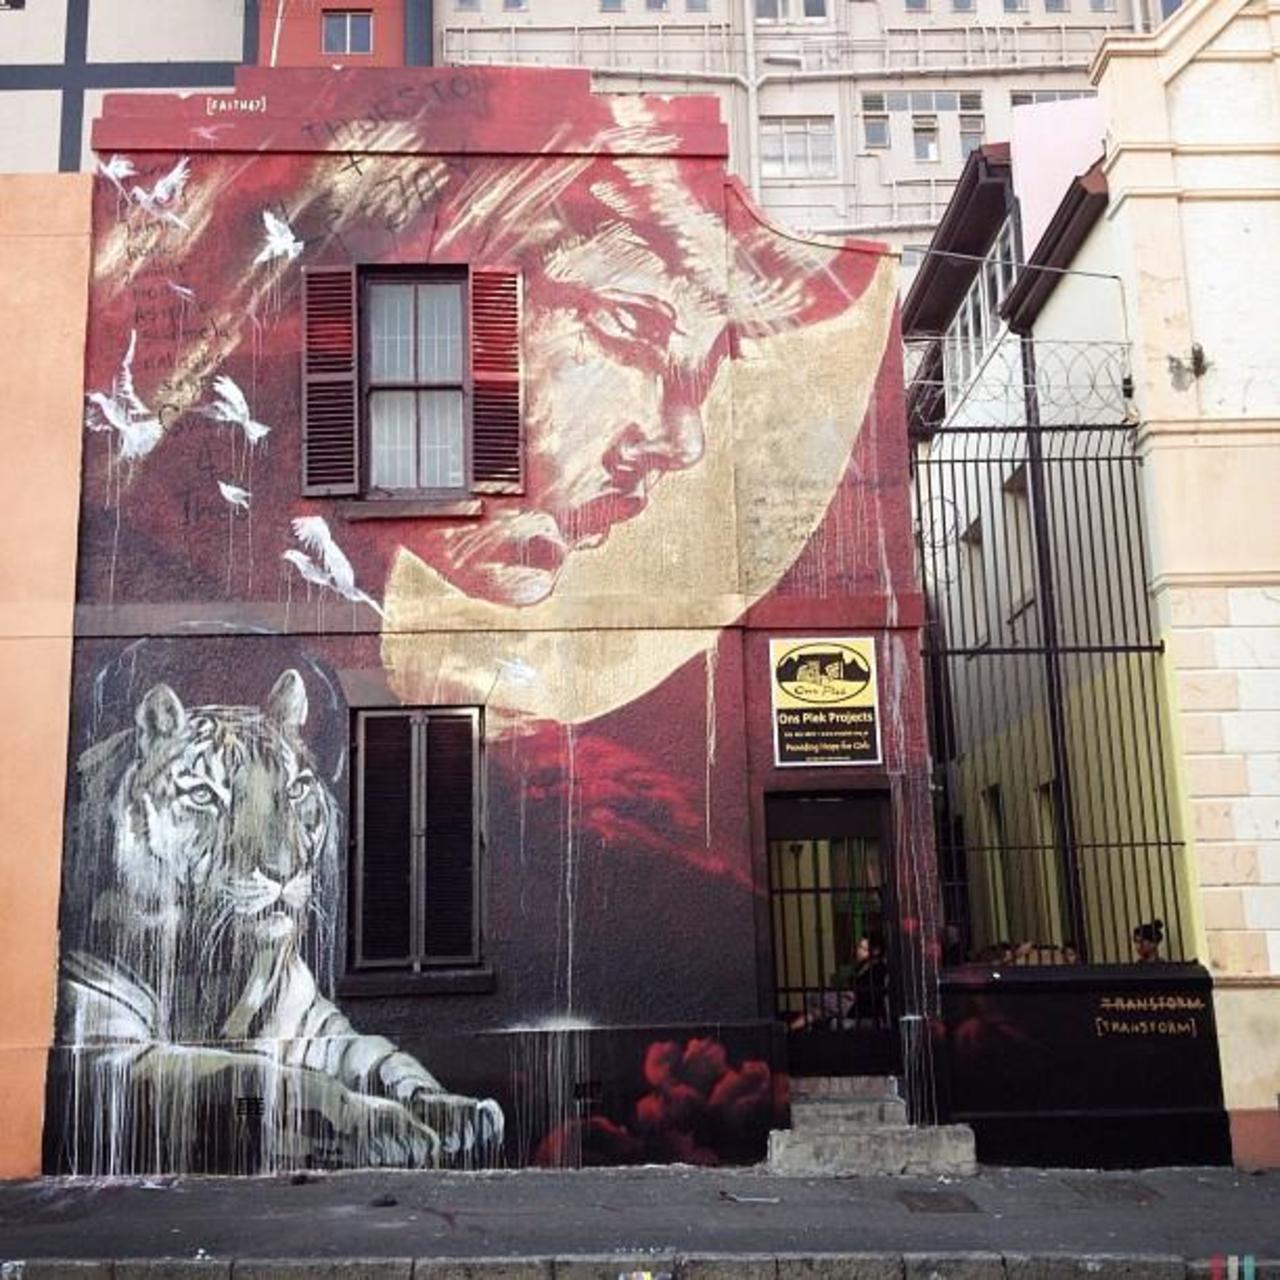 Tiger Moon in South Africa #streetart #graffiti #art #southafrica #funky #dope . : http://t.co/yi4xINODSa